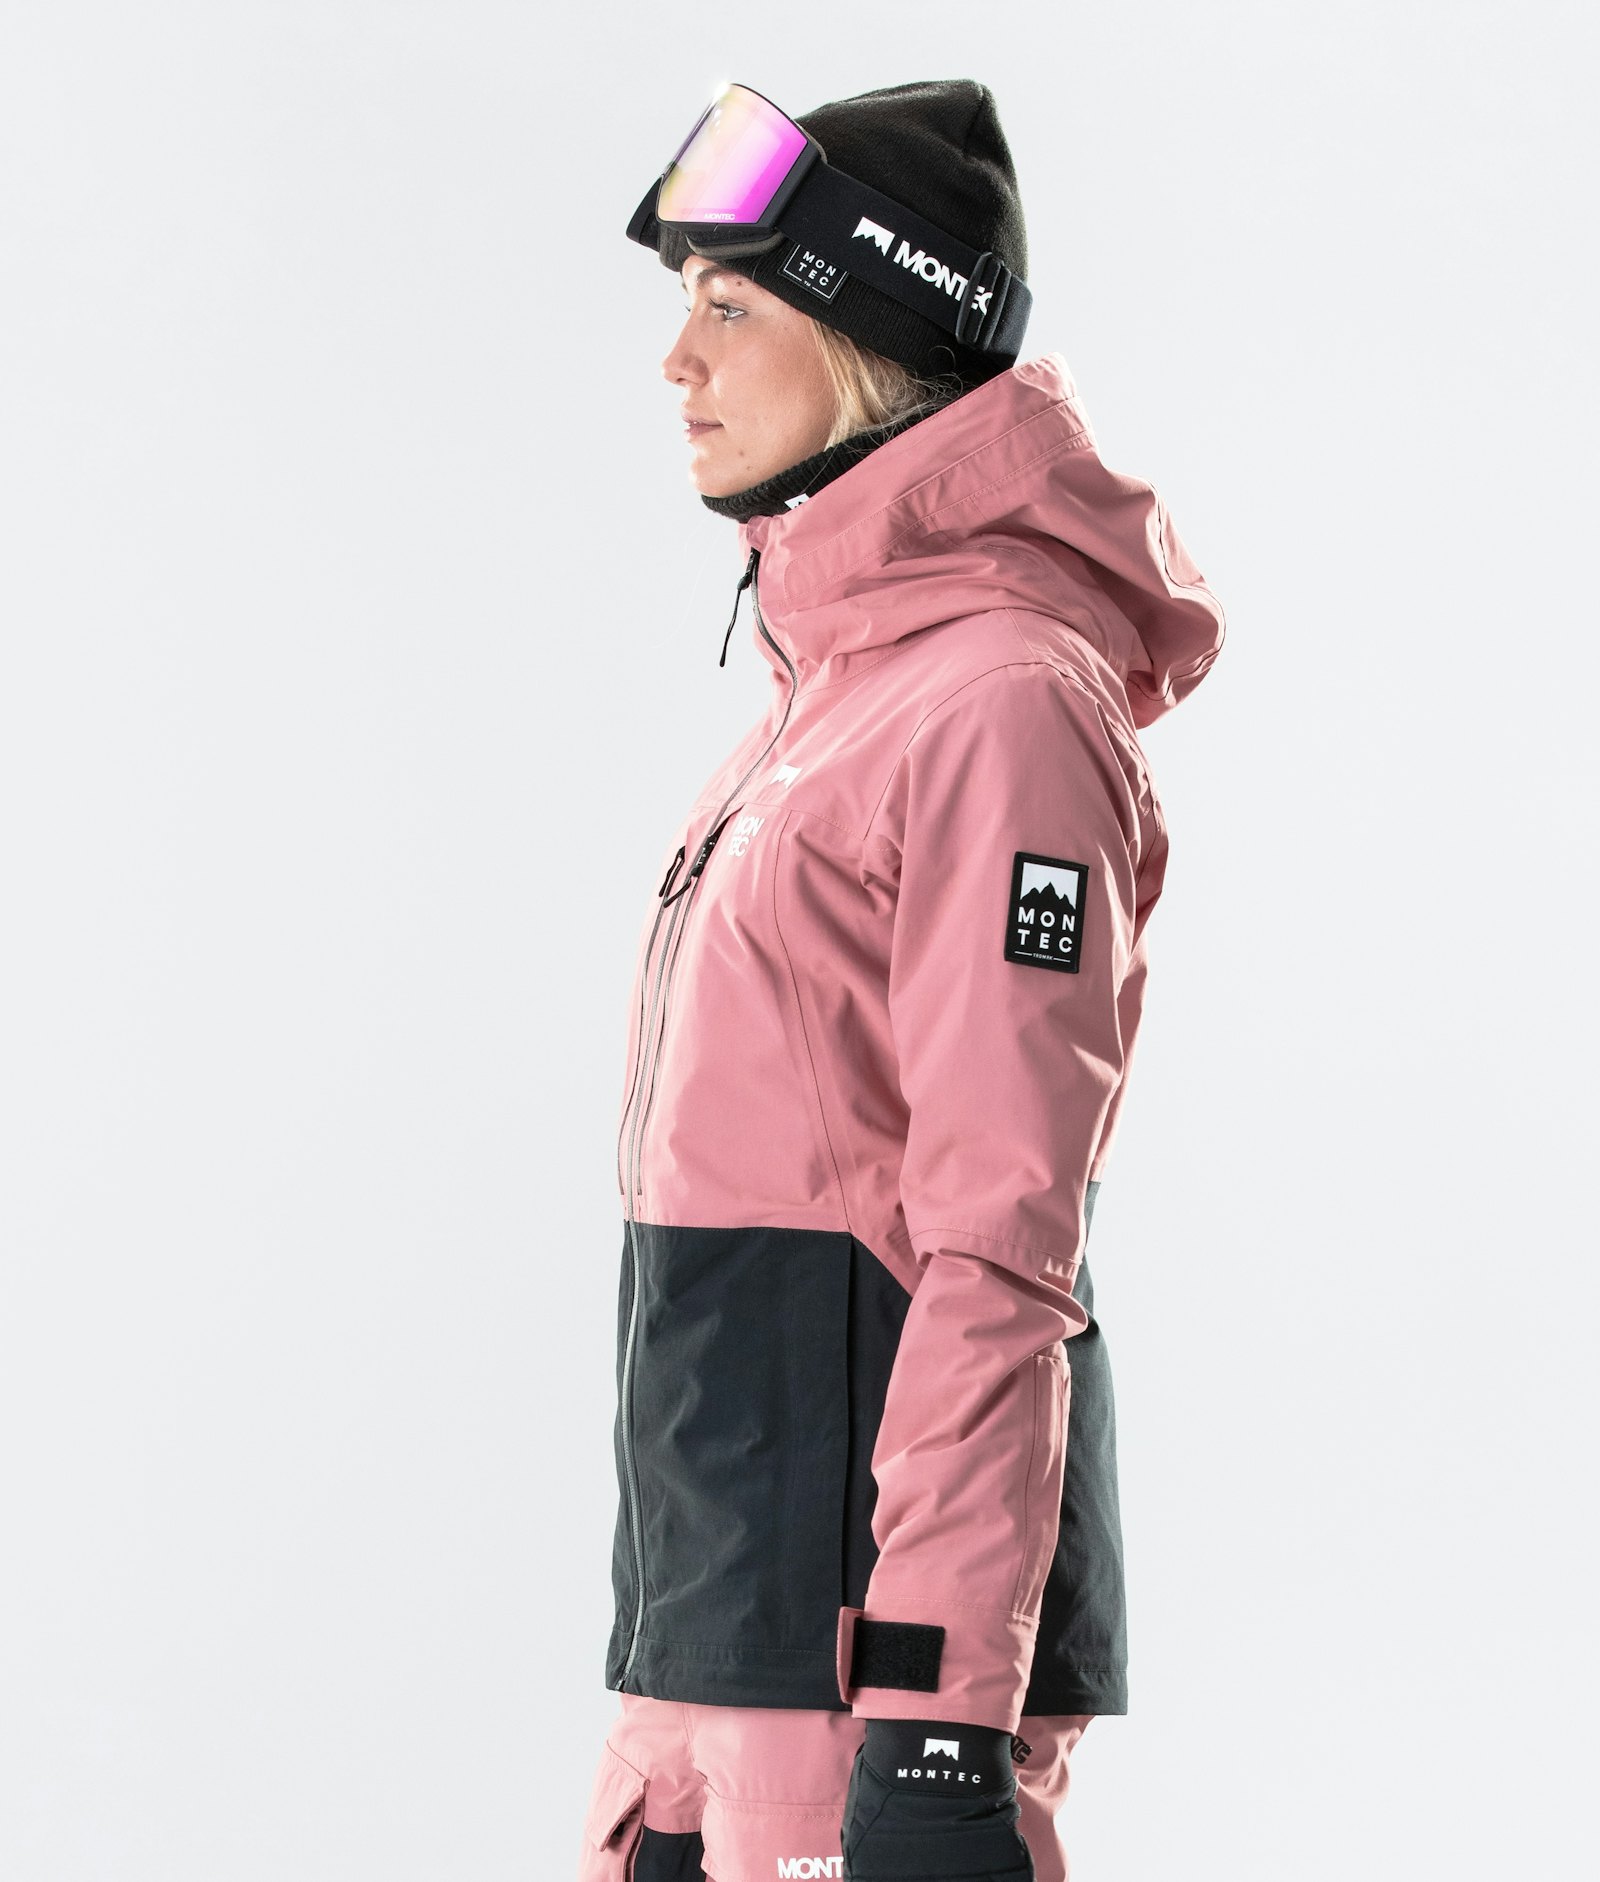 Montec Moss W 2020 Chaqueta Esquí Mujer Pink/Black